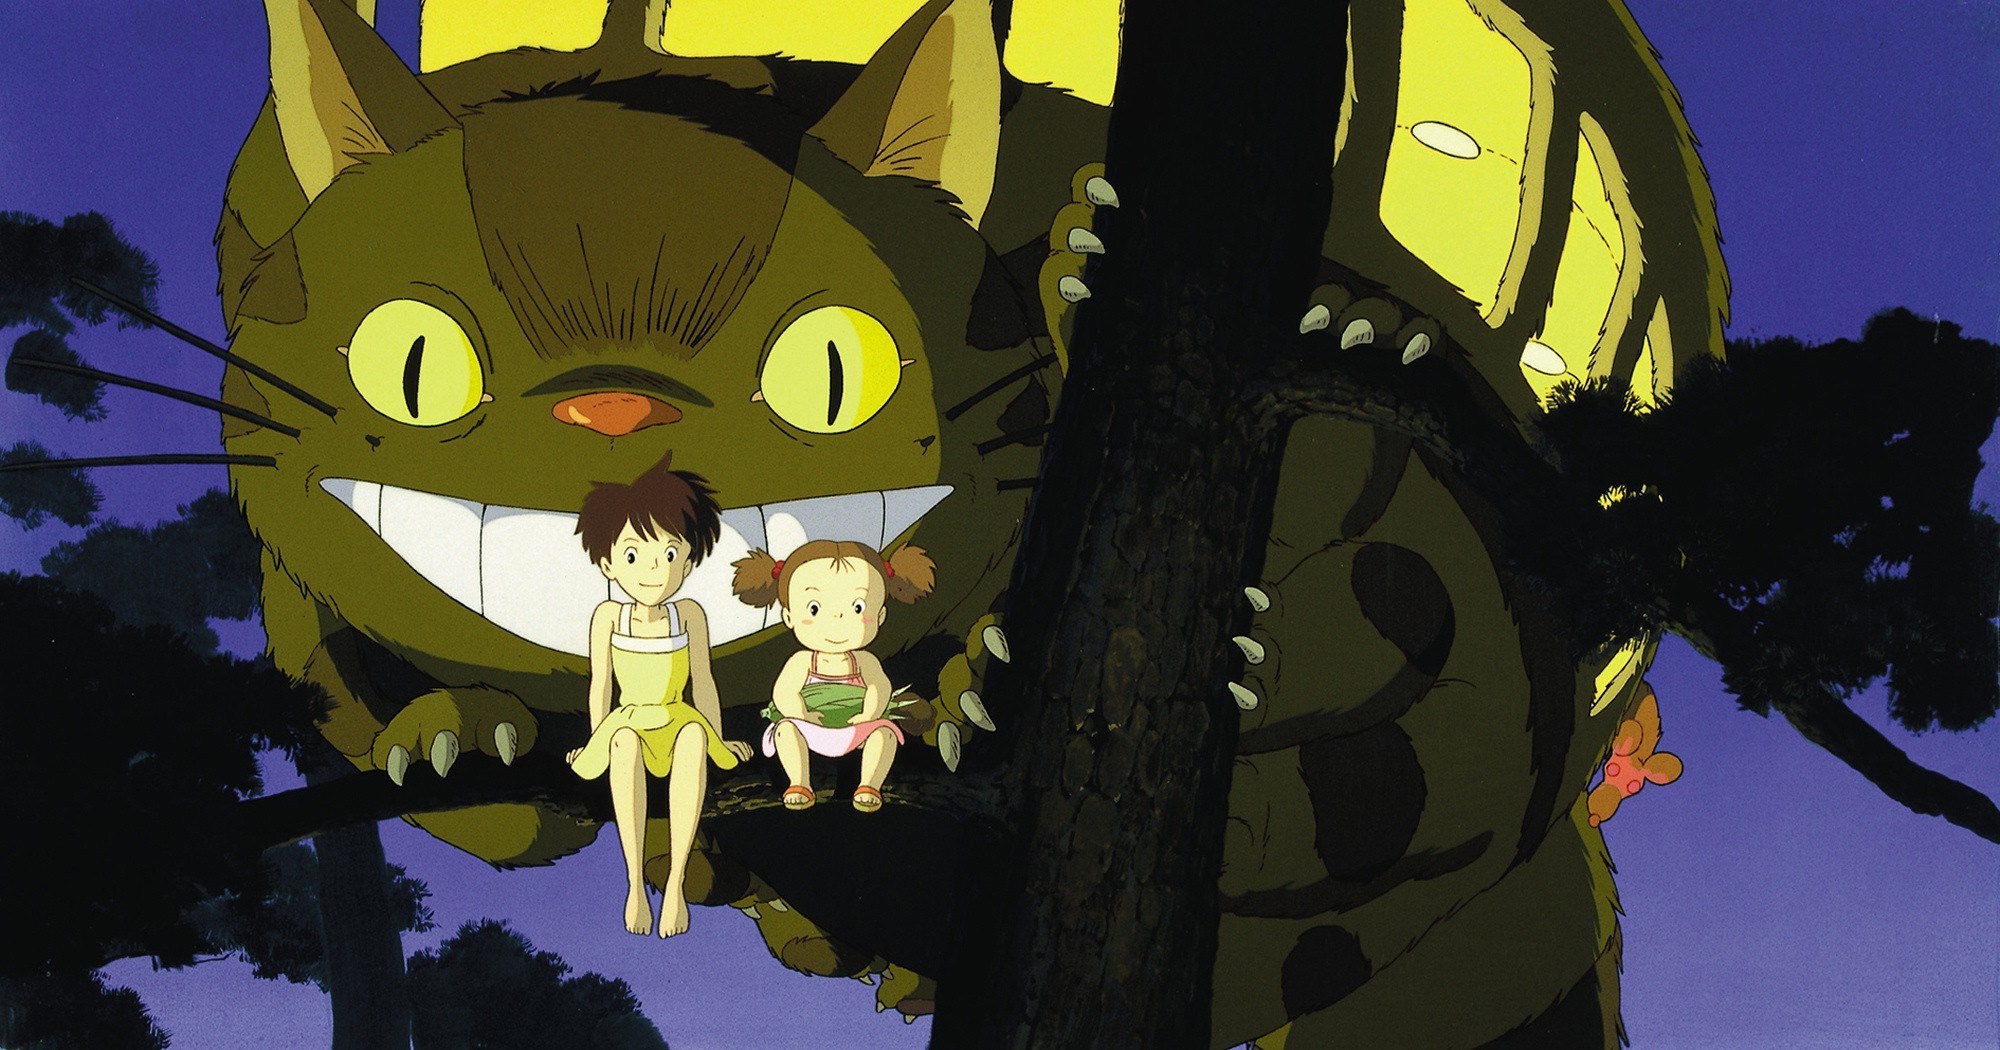 Studio Ghibli My Neighbor Totoro Anime Wallpapers Hd Desktop And Mobile Backgrounds